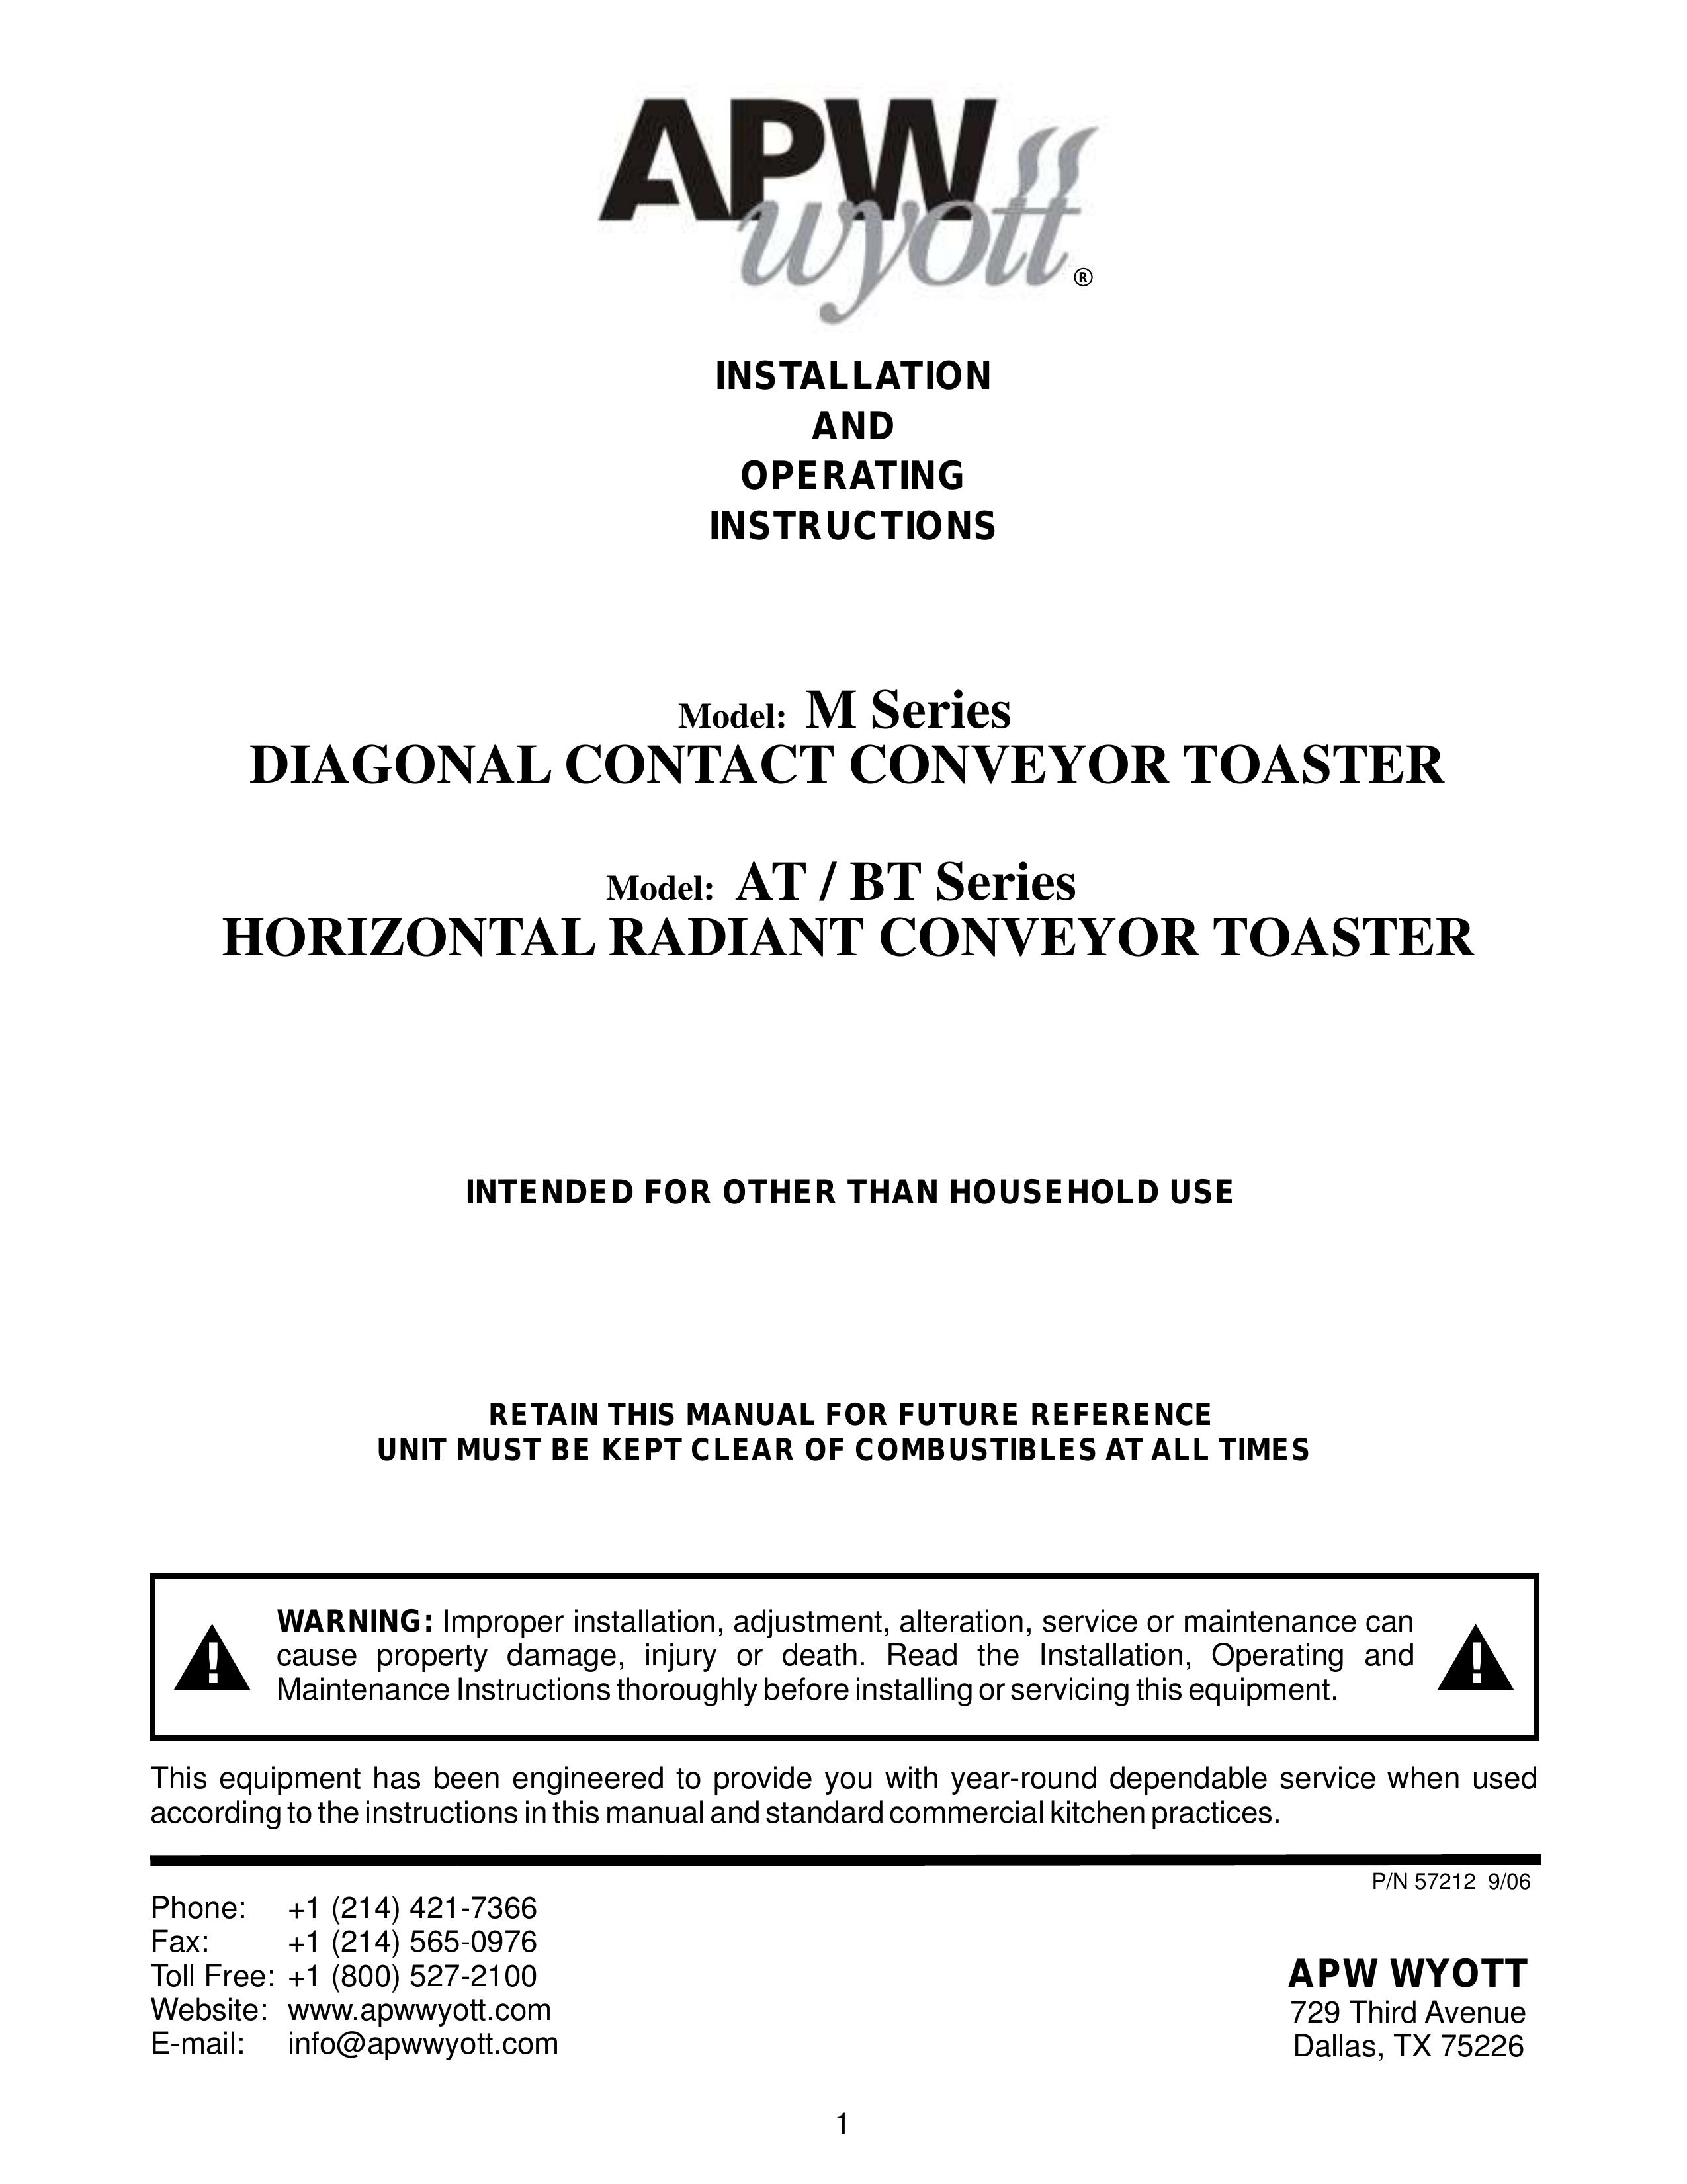 APW Wyott AT/BT Series Toaster User Manual